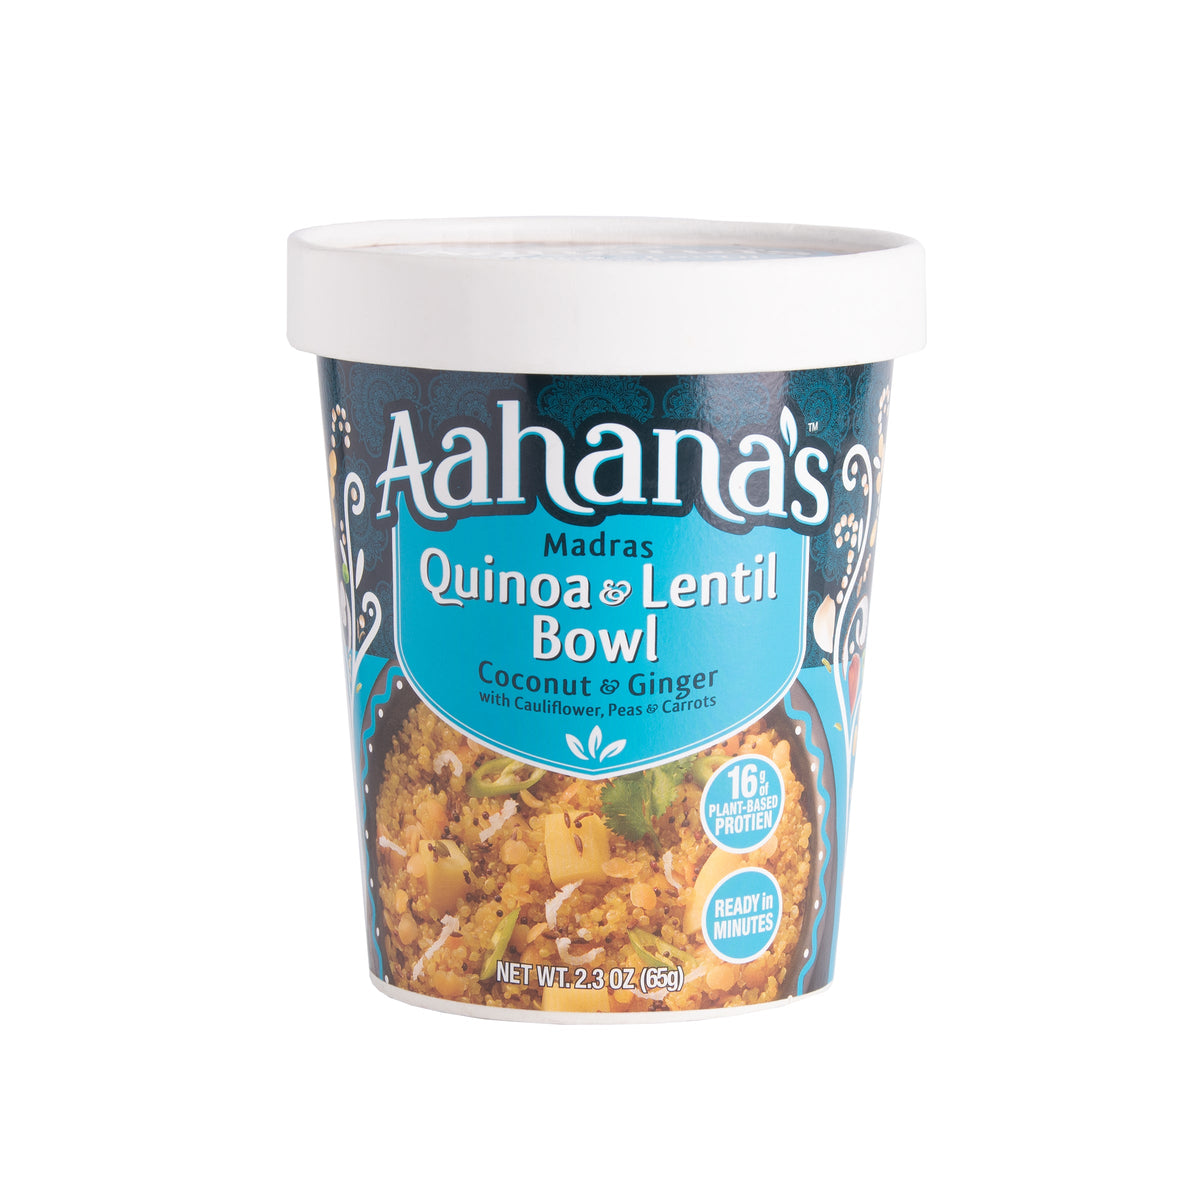 Aahana's Madras Quinoa & Lentil Bowl (Khichdi) - Gluten-Free, 16g Plant-Based Protein, Vegan, Non-GMO, Ready-to-Eat Meal (2.3oz., Pack of 4)